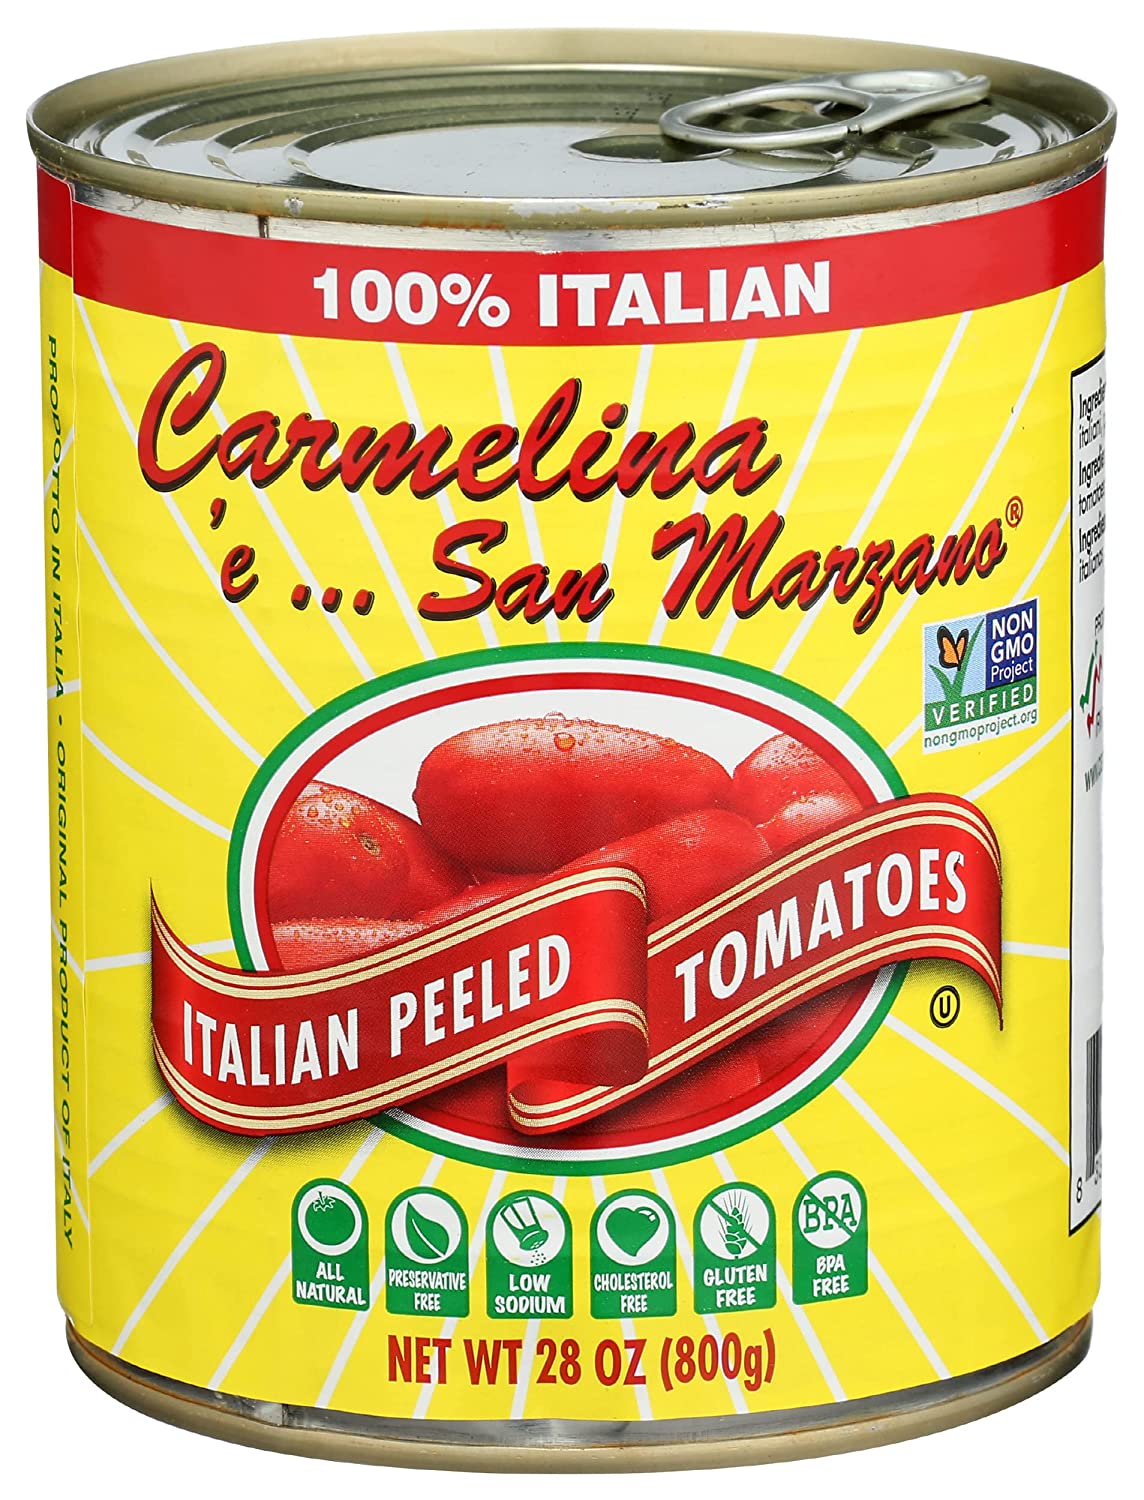 CARMELINA San Marzano Tomatoes, Peeled Whole, 28oz can